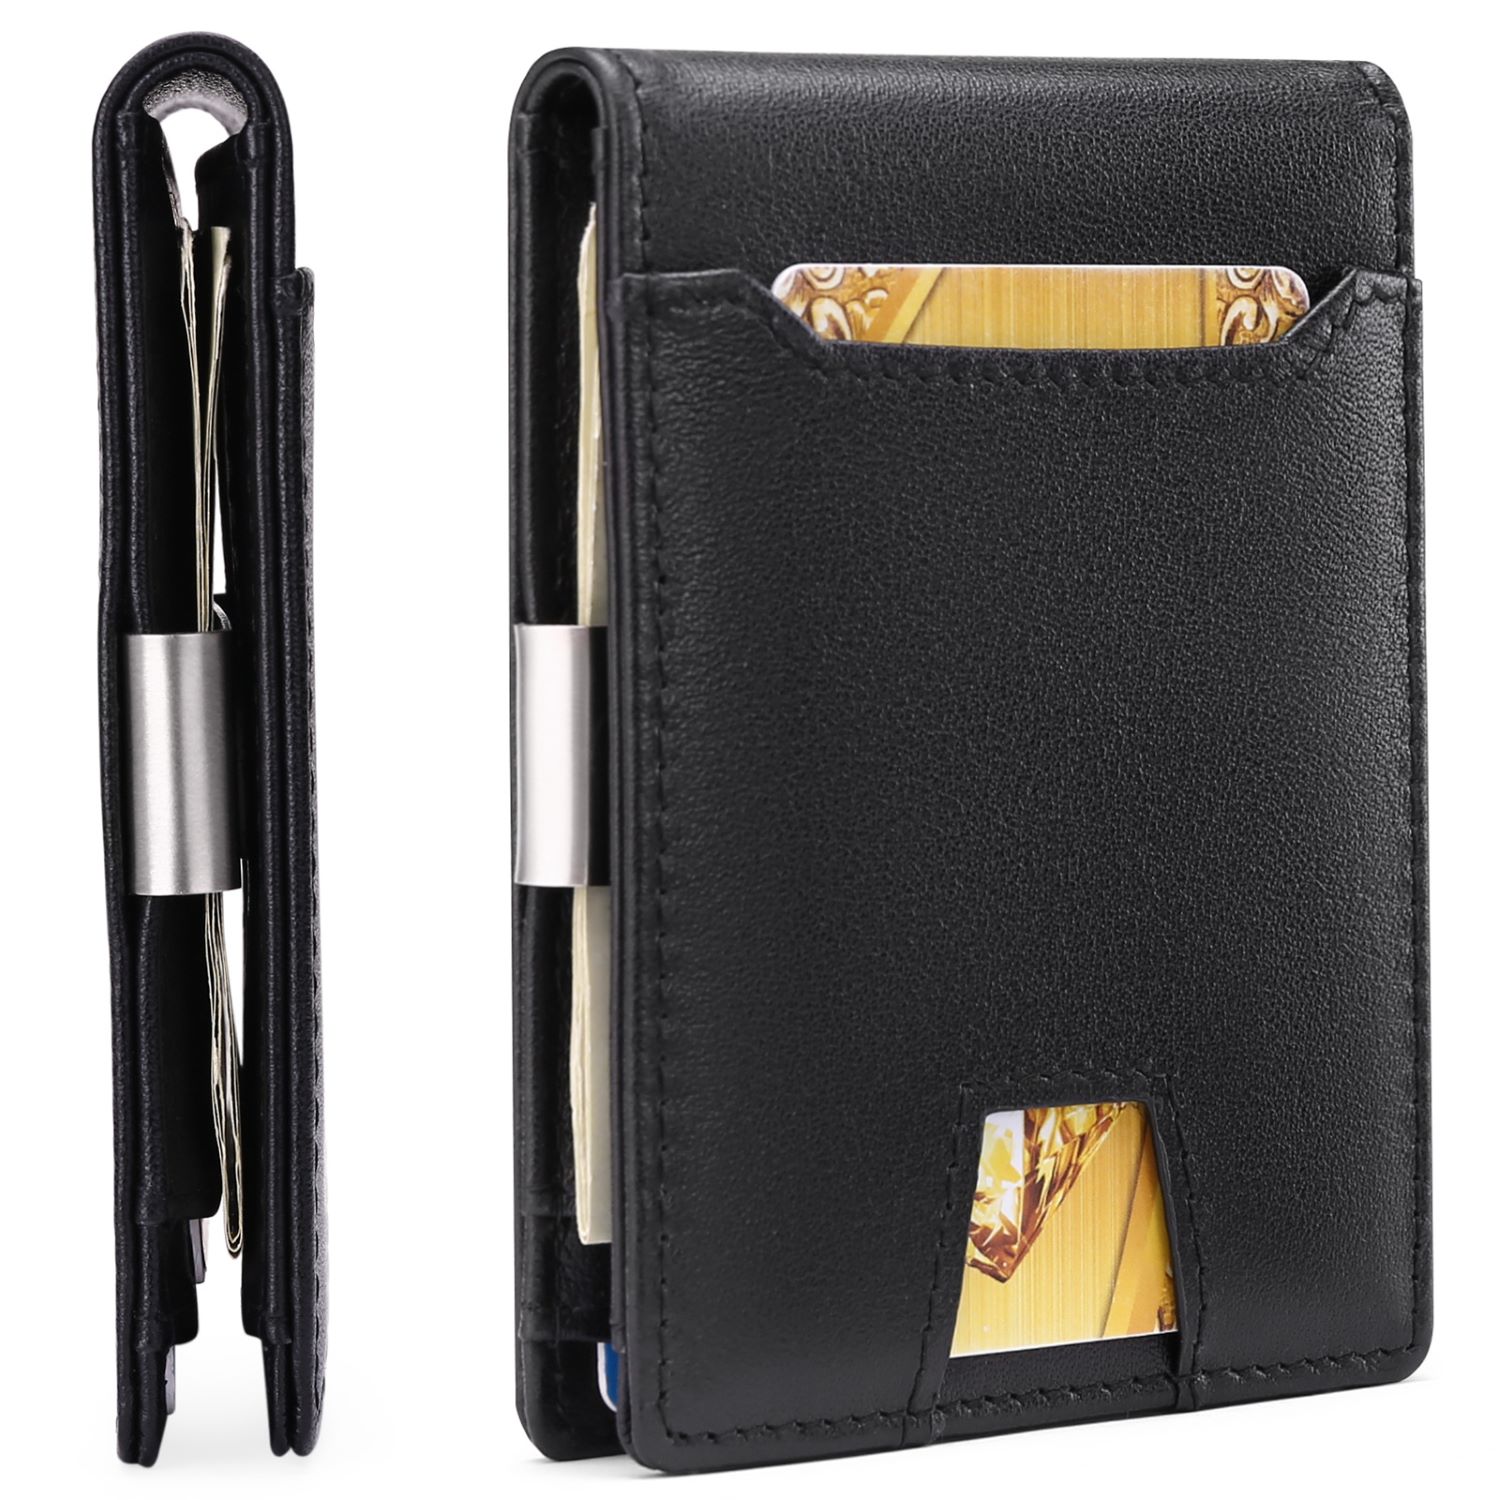 Extremus Tactical Wallet, Carbon Fiber Wallet, Money Clip, RFID